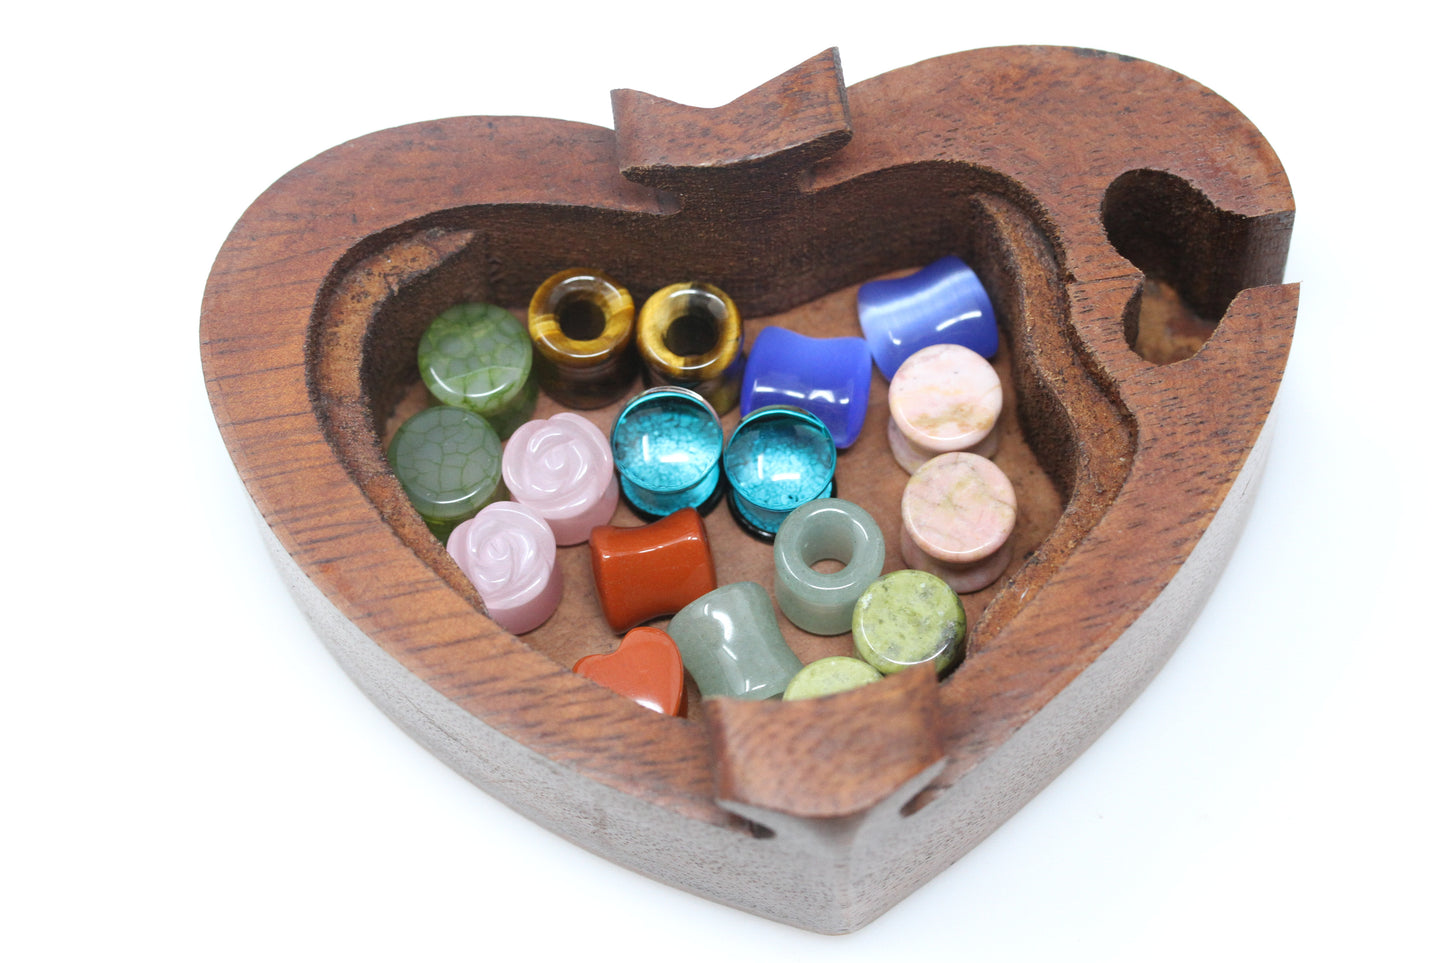 Heart secret hidden wooden box - (Plugs not included) SWQA0027